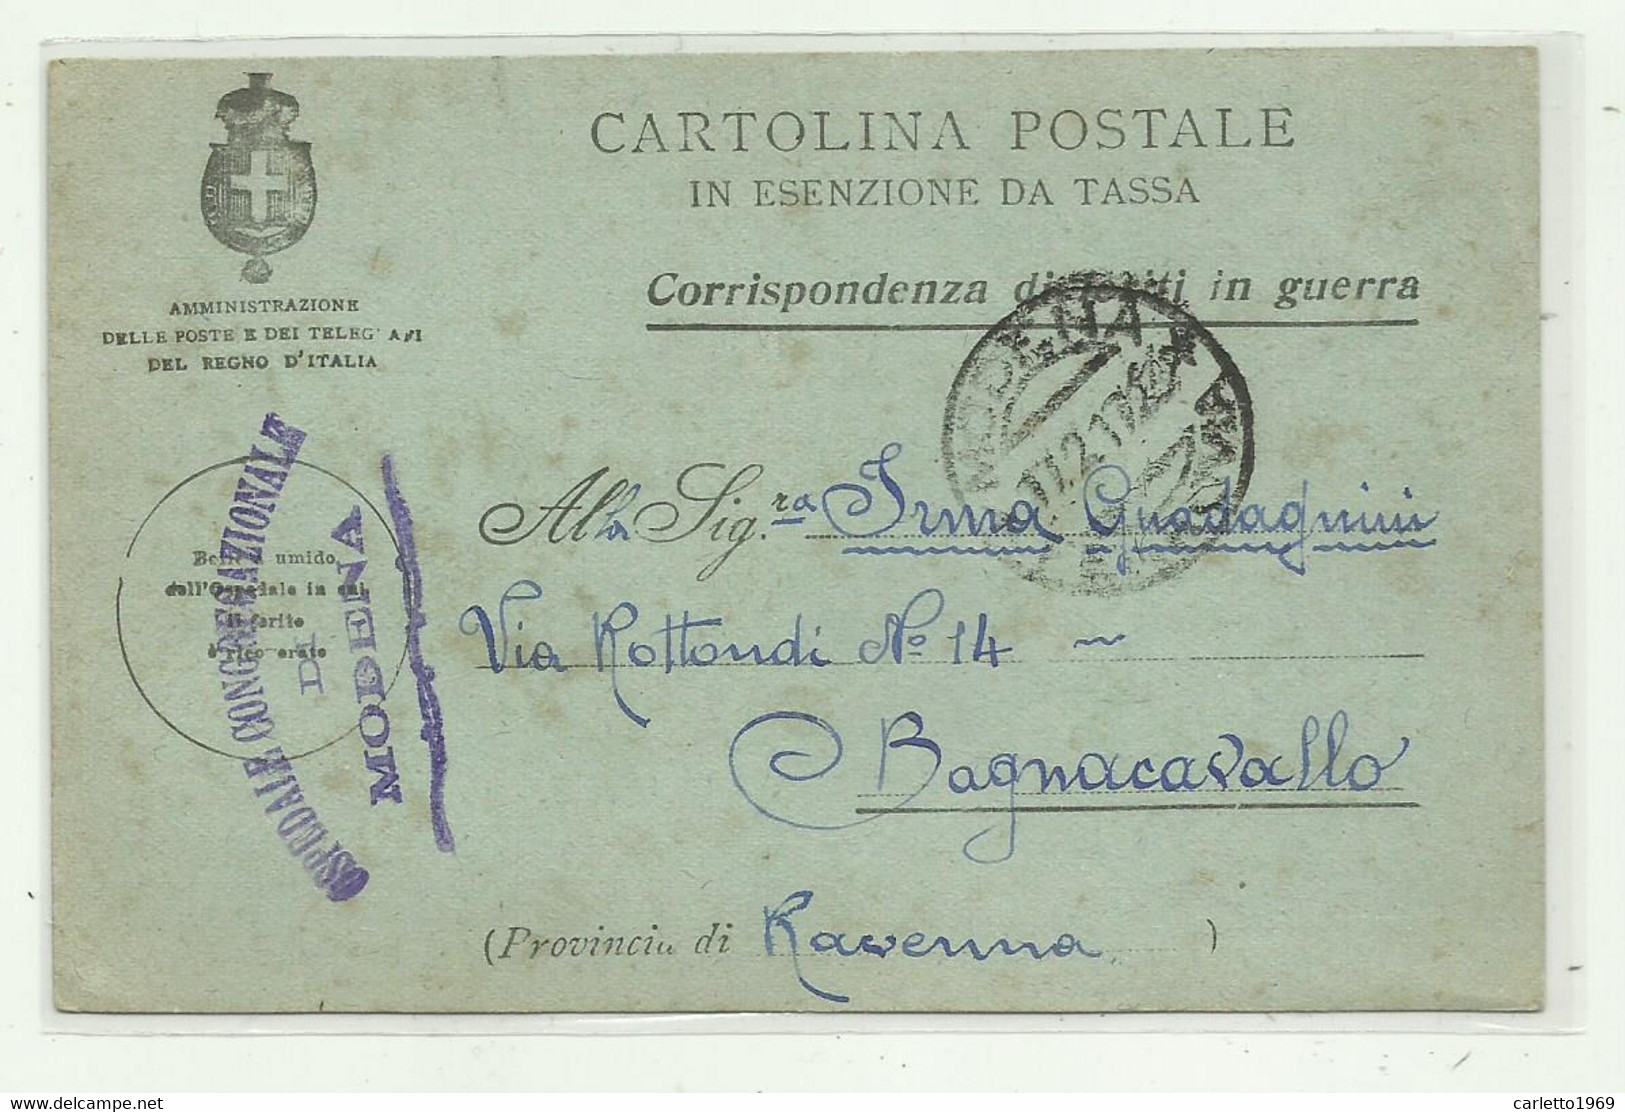 CARTOLINA POSTALE - CORRISPONDENZA DI FERITI IN GUERRA - OSPEDALE CONGREGAZIONALE MODENA 1917 - Portofreiheit